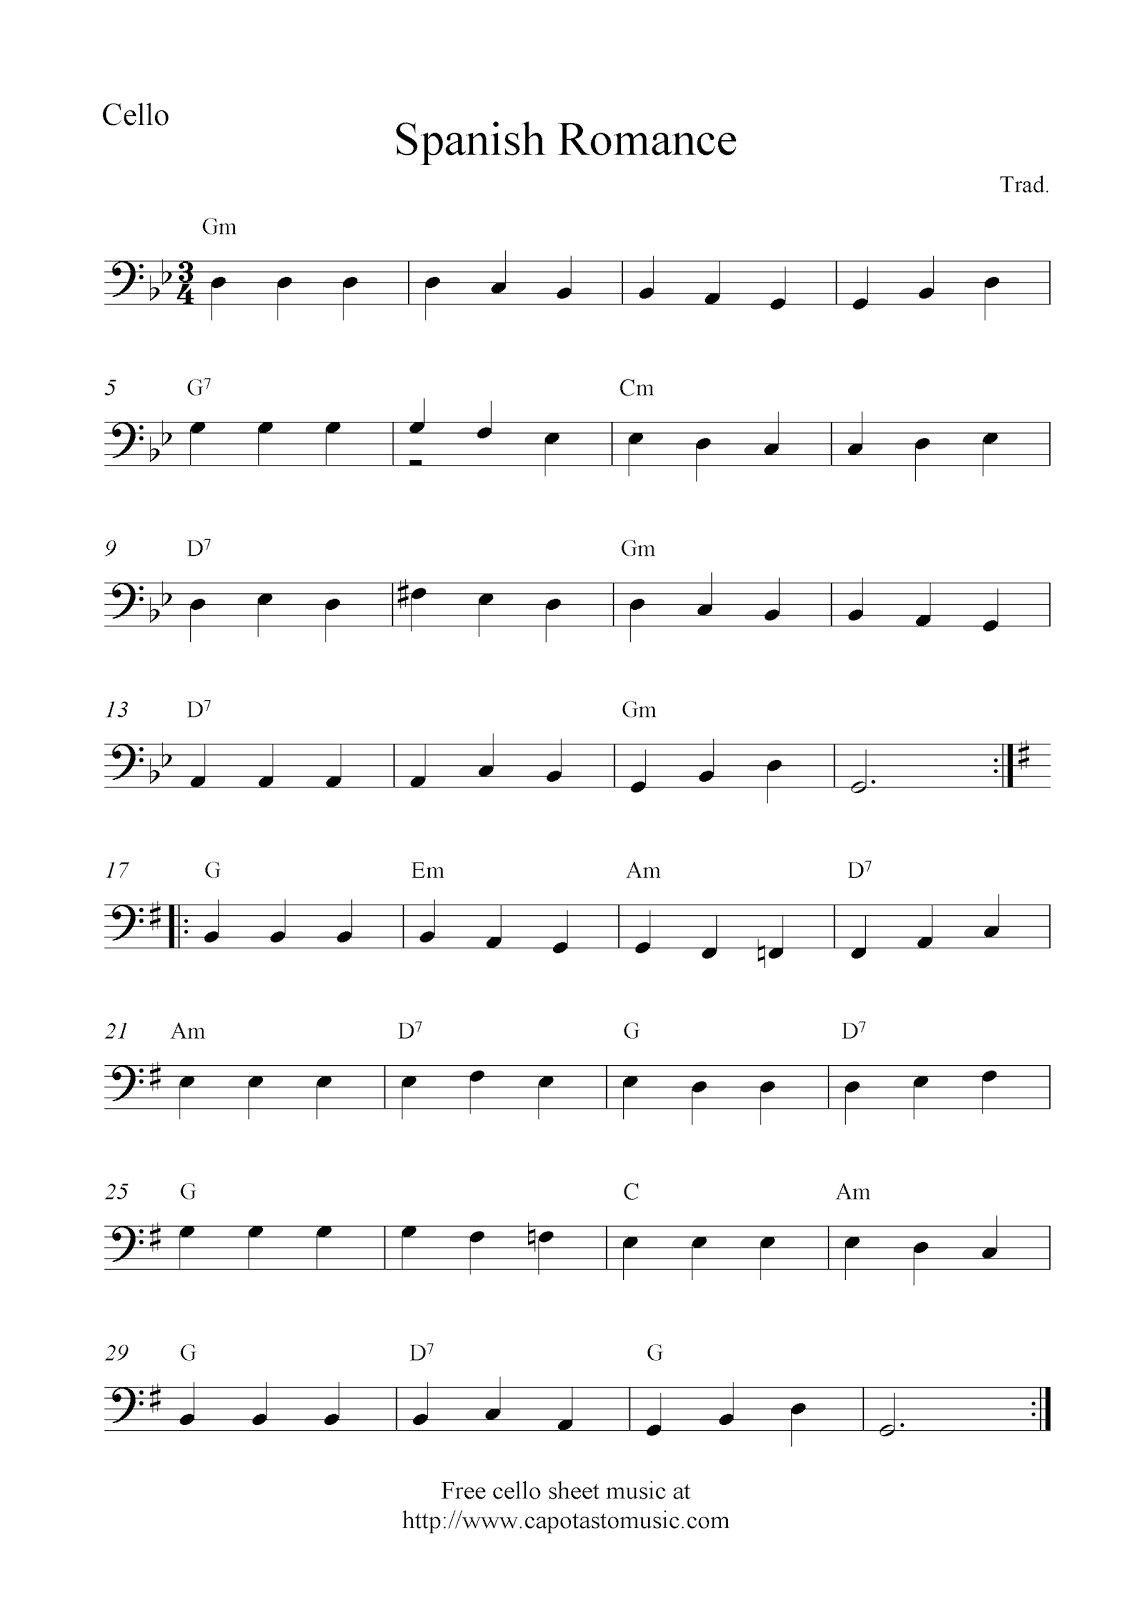 Cello Music Sheets Free Beginner